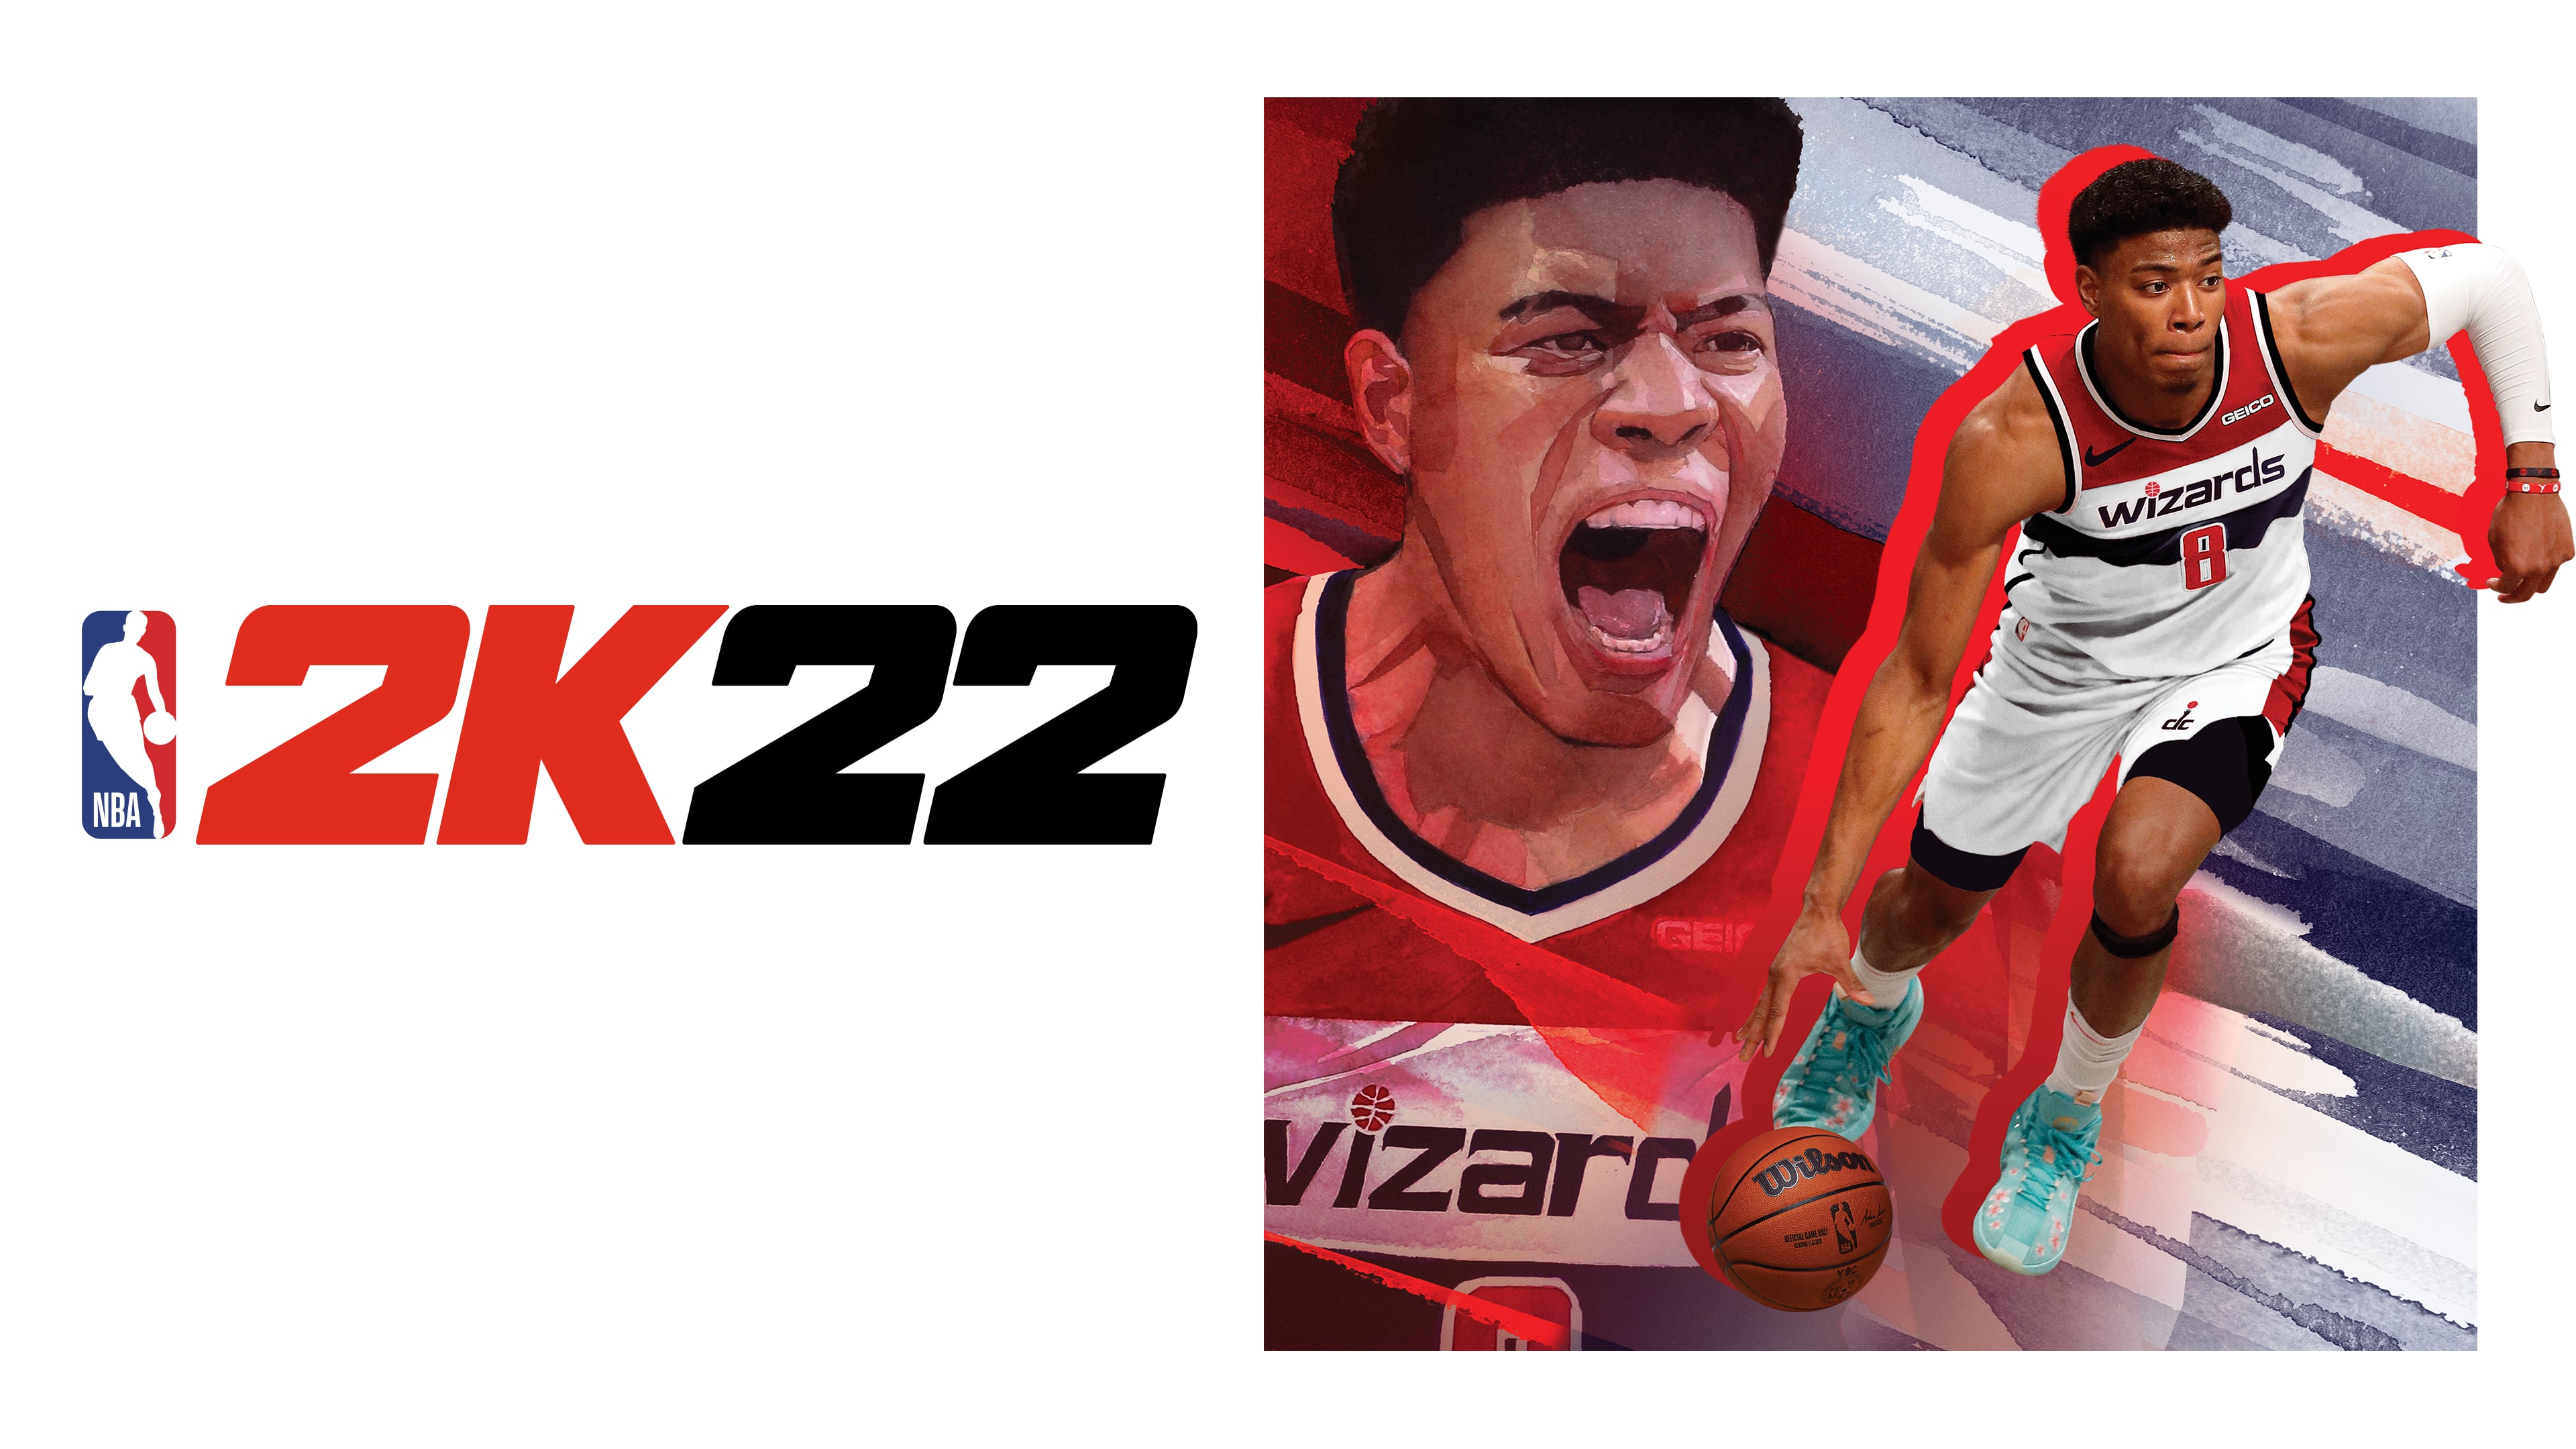 PS5™版 NBA 2K22 NBA 75周年記念エディション